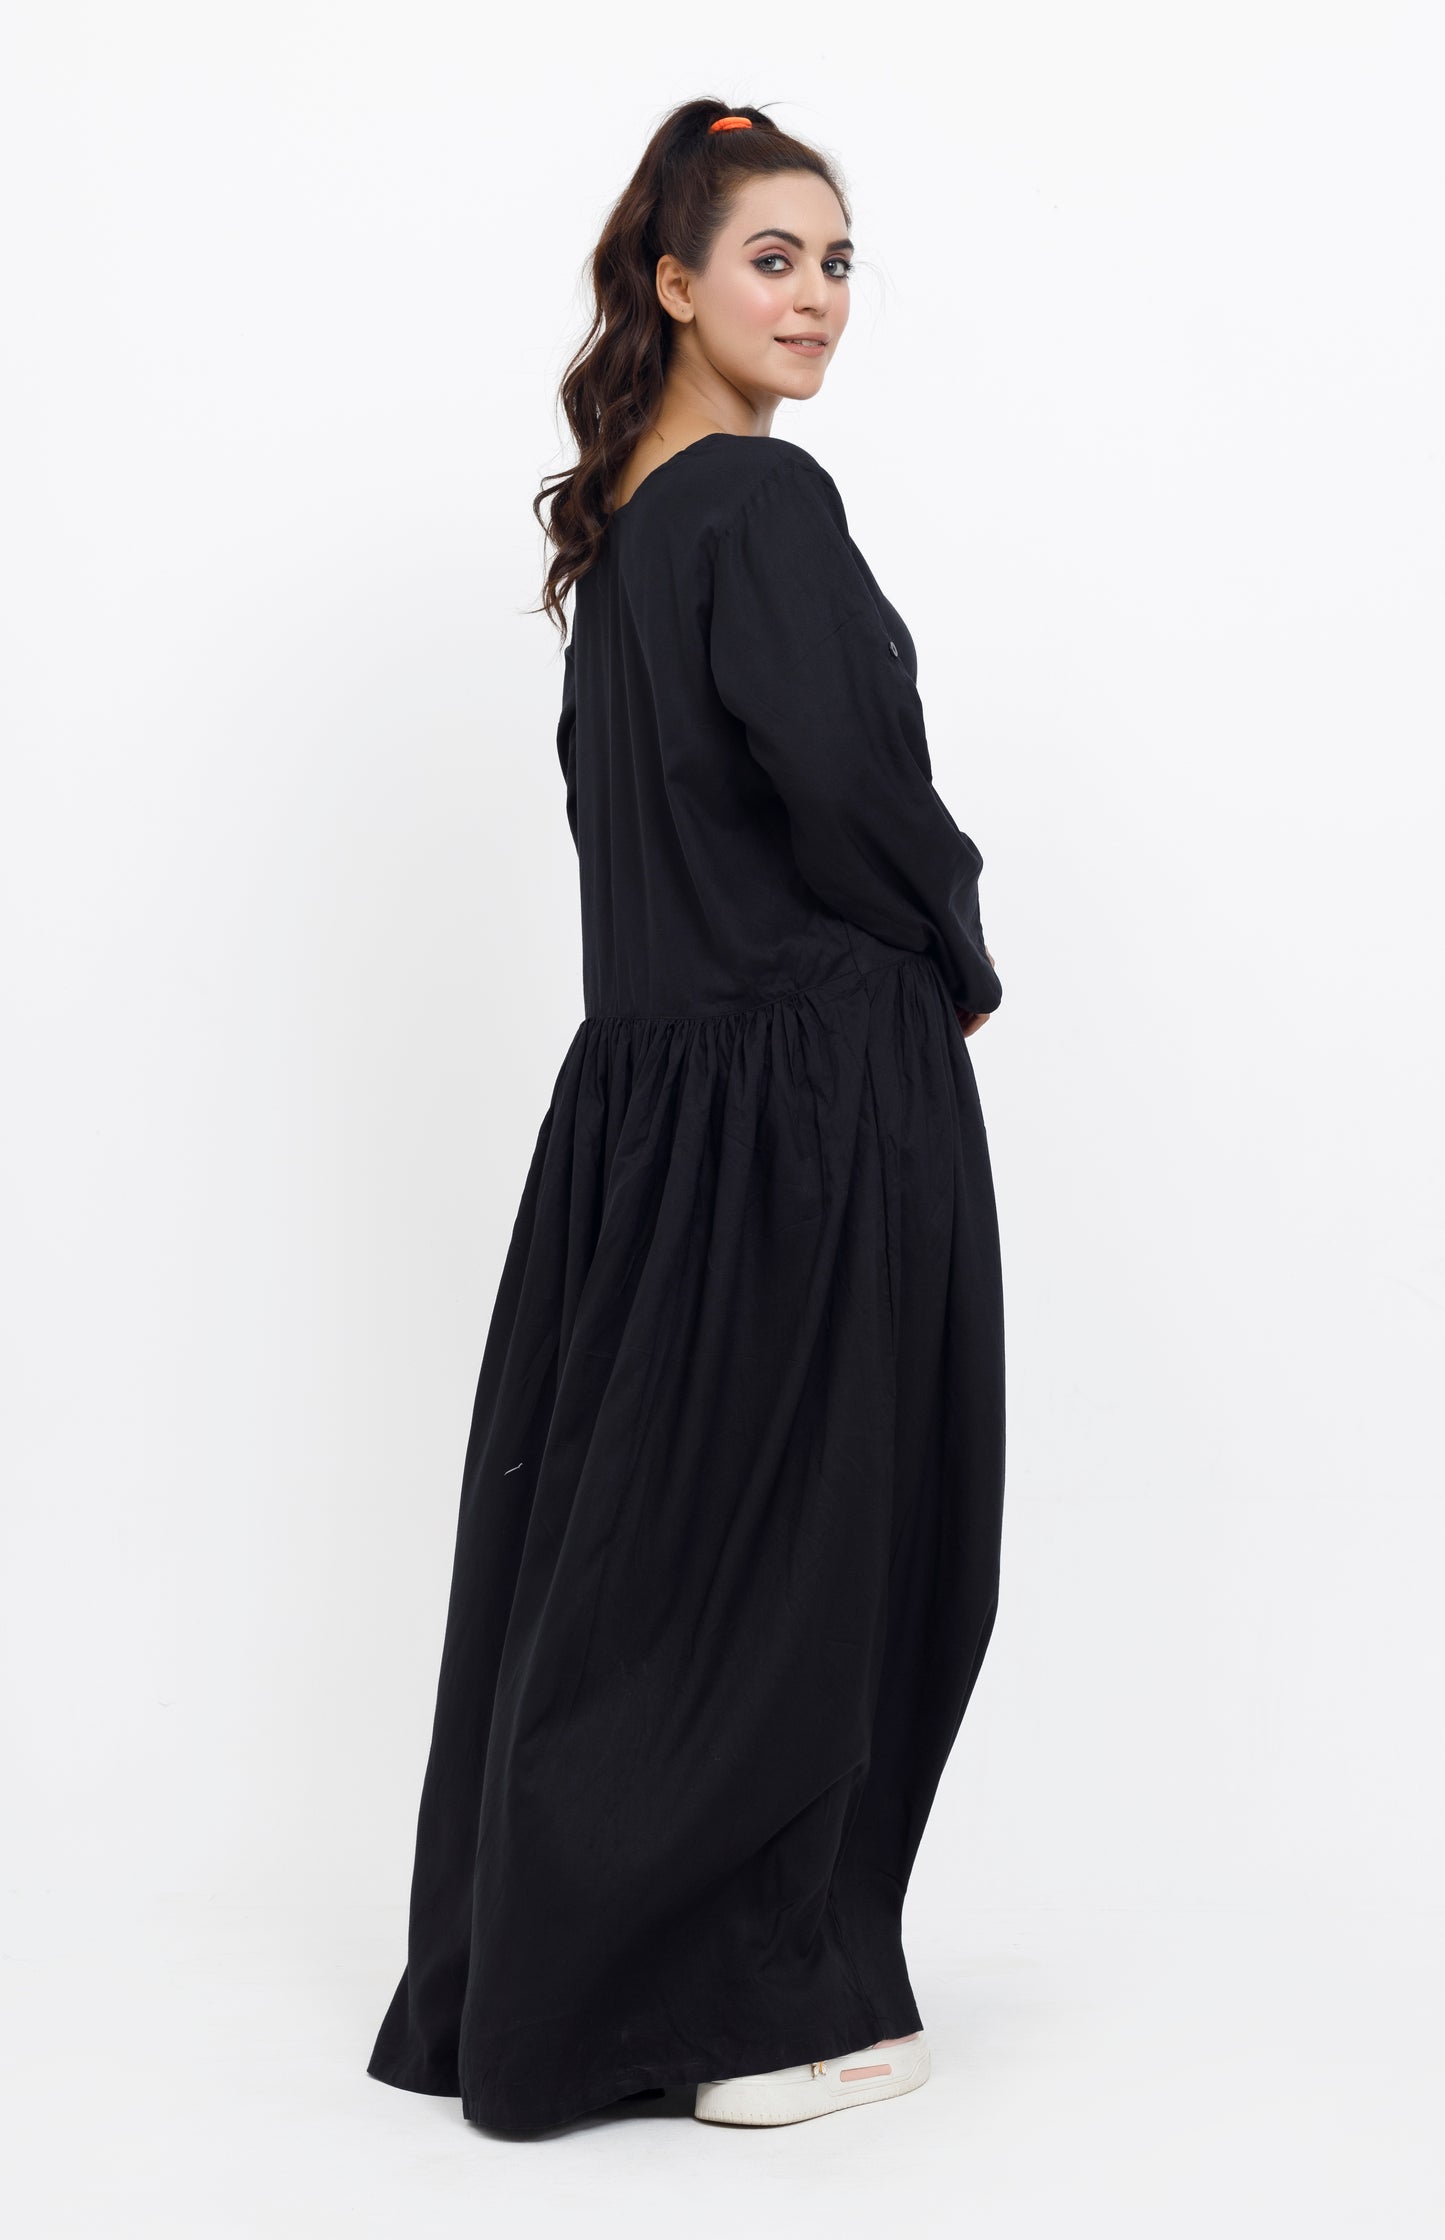 Effortless Elegance: Linen Maxi Dress with Chic Front Pocket in Black